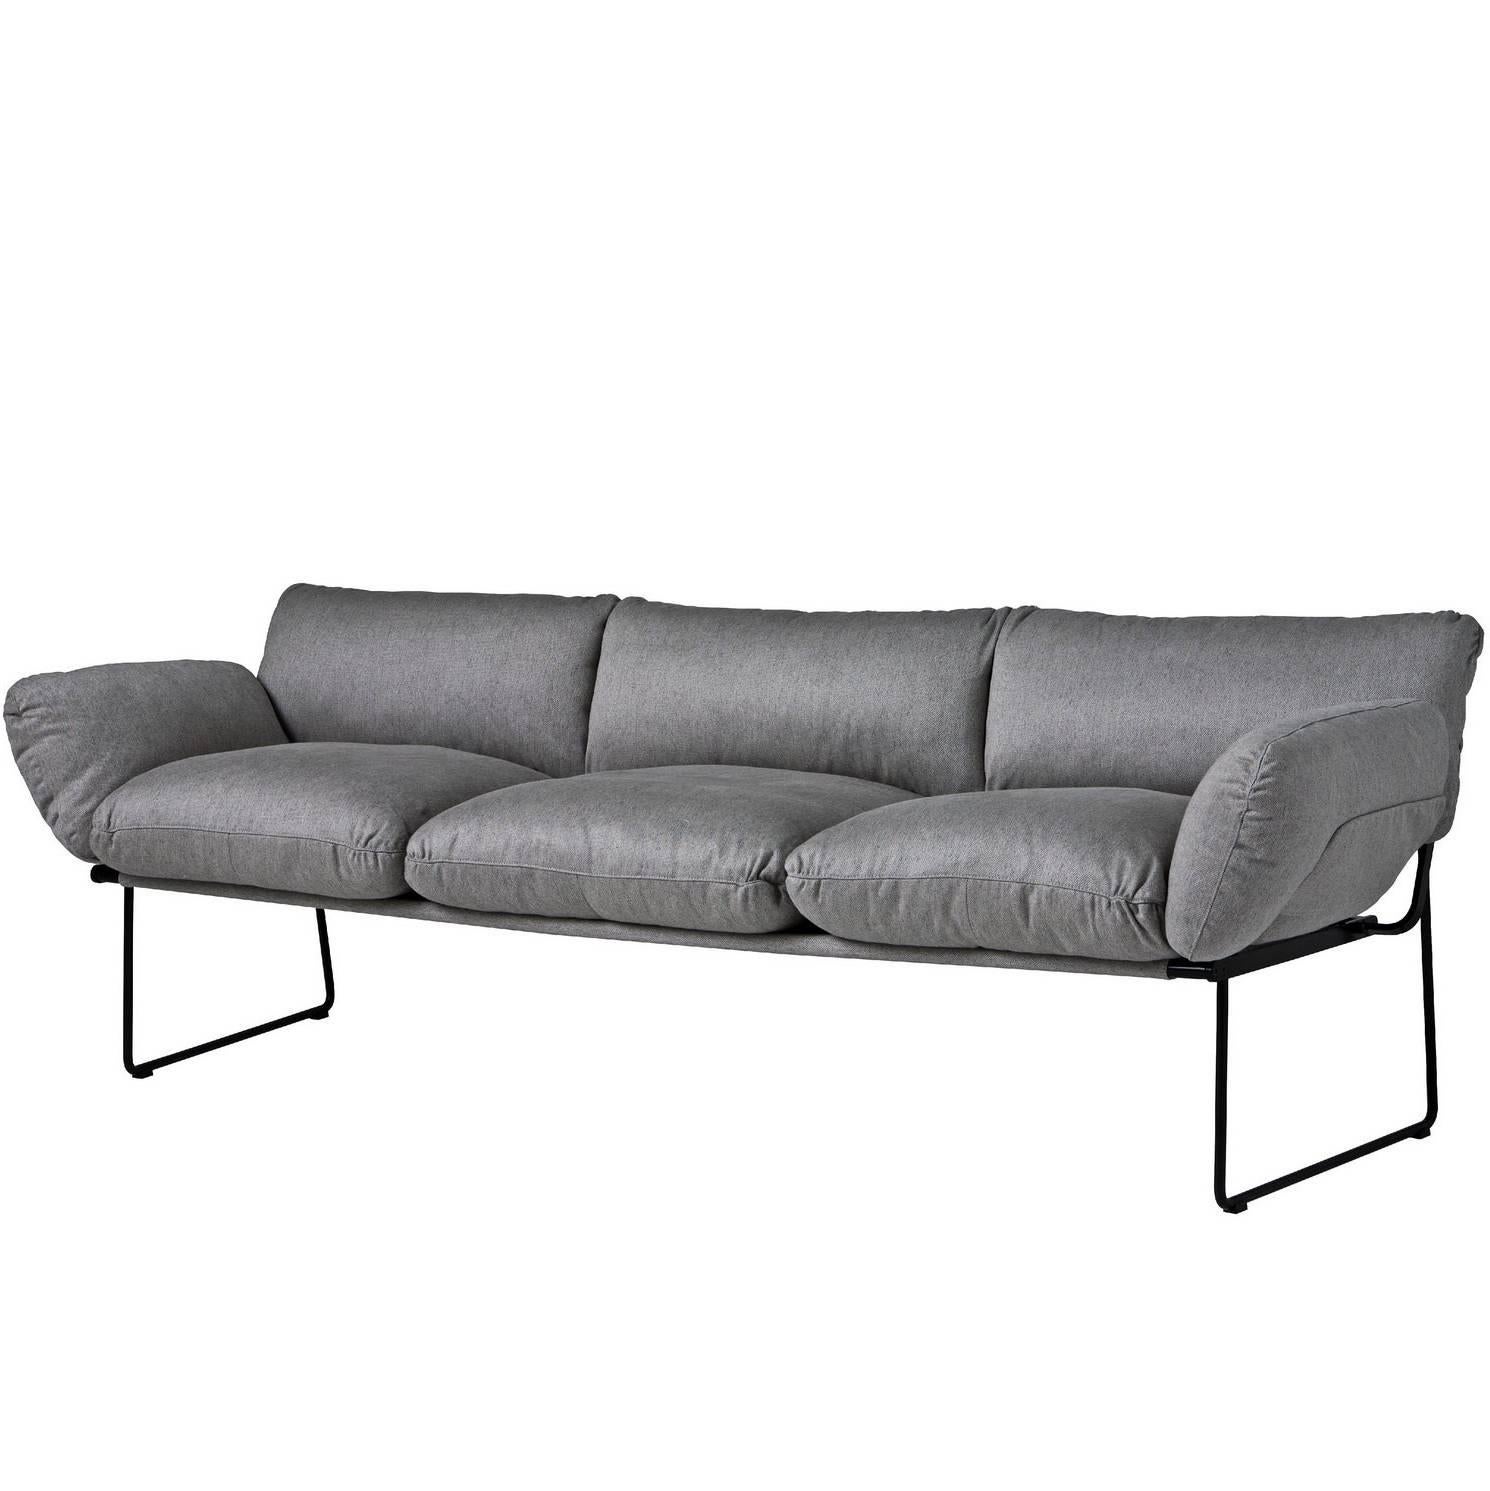 "Elisa" Indoor Three-Seat Sofa Designed by Enzo Mari for Driade